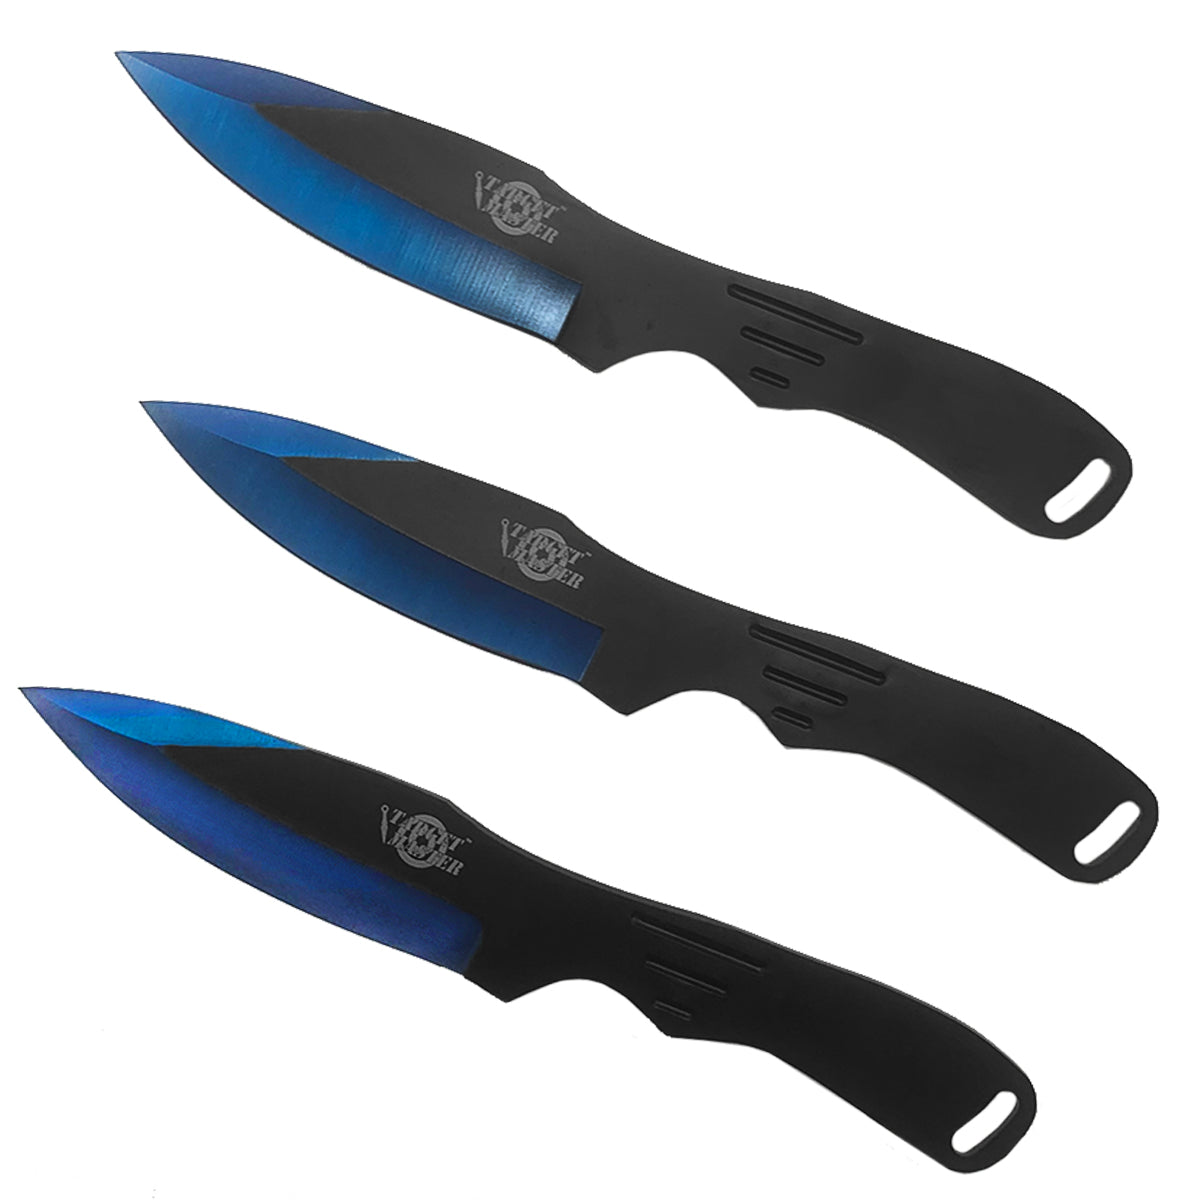 target-master-3-pcs-throwing-knife-set-8-overall-length-w-nylon-sheath